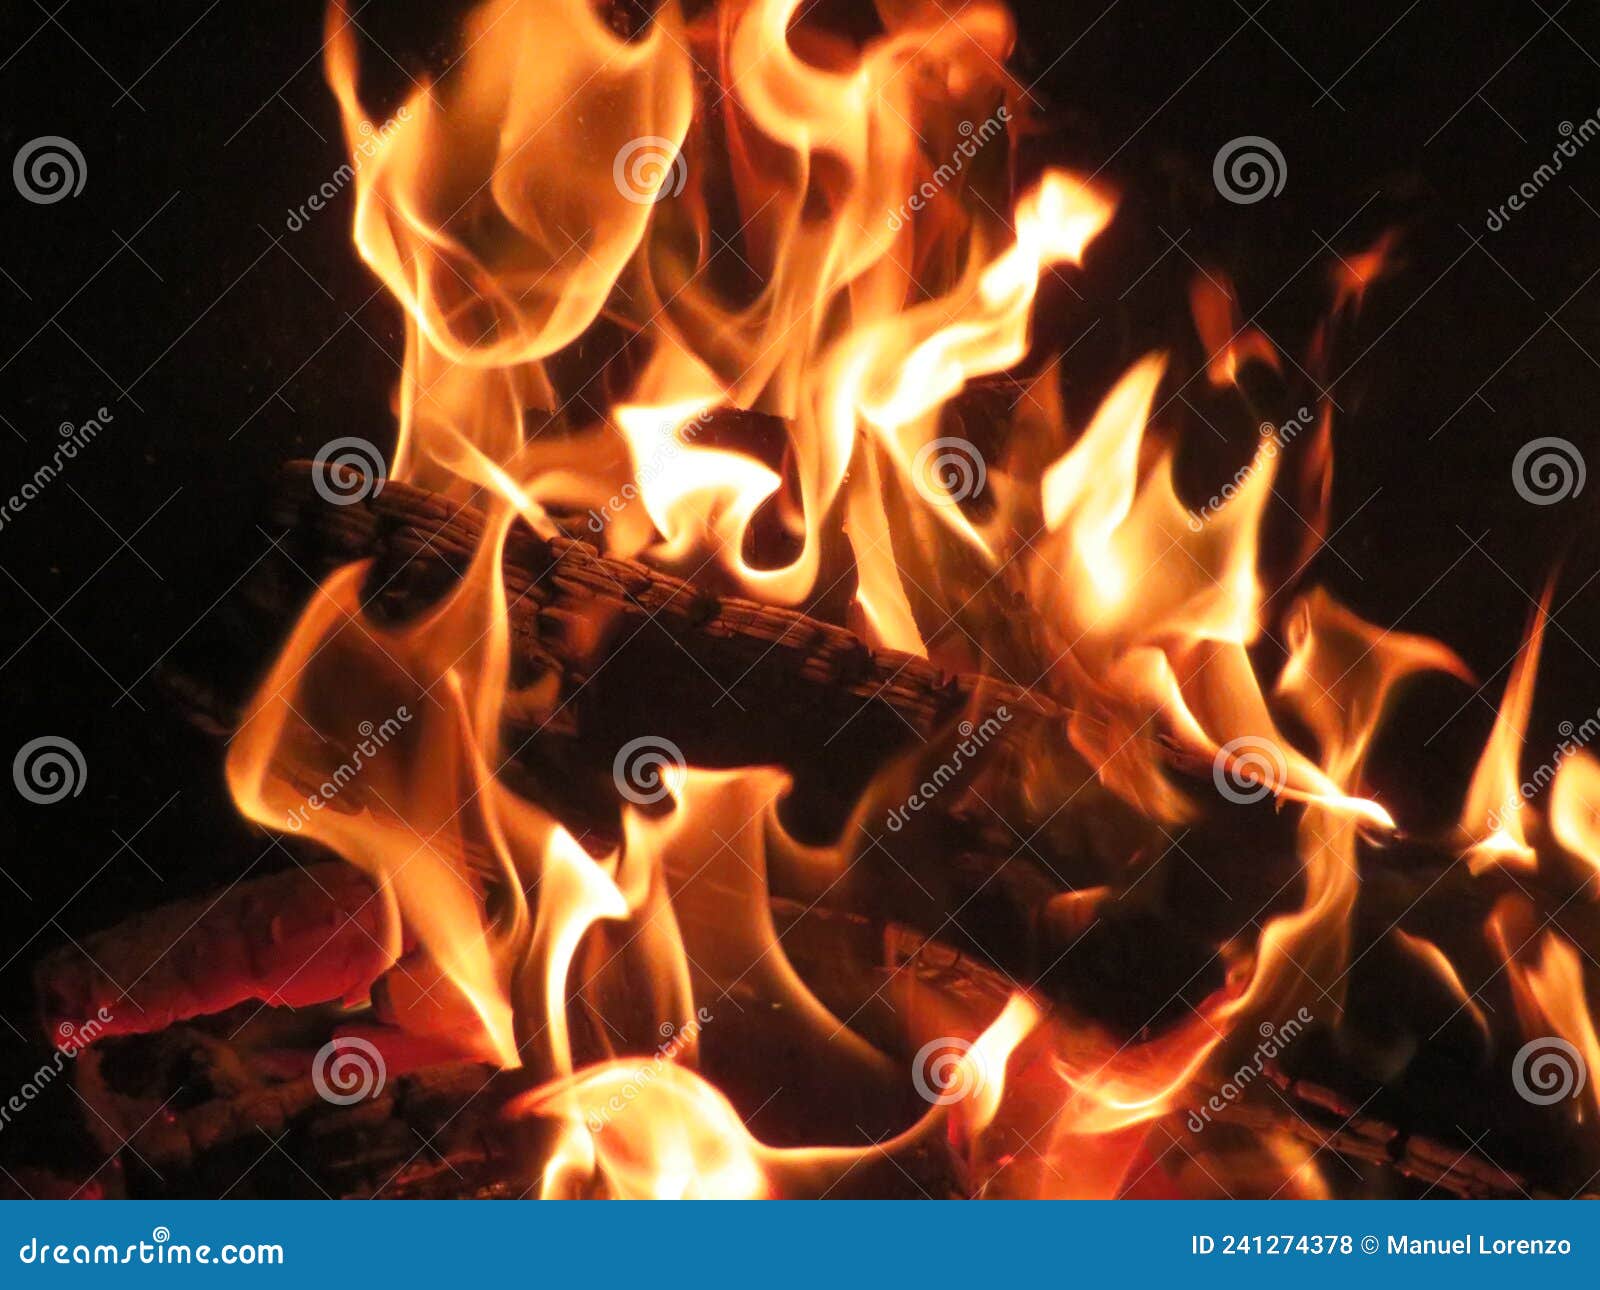 bonfire fire heat hot flame burn incandescent wood fireplace ash